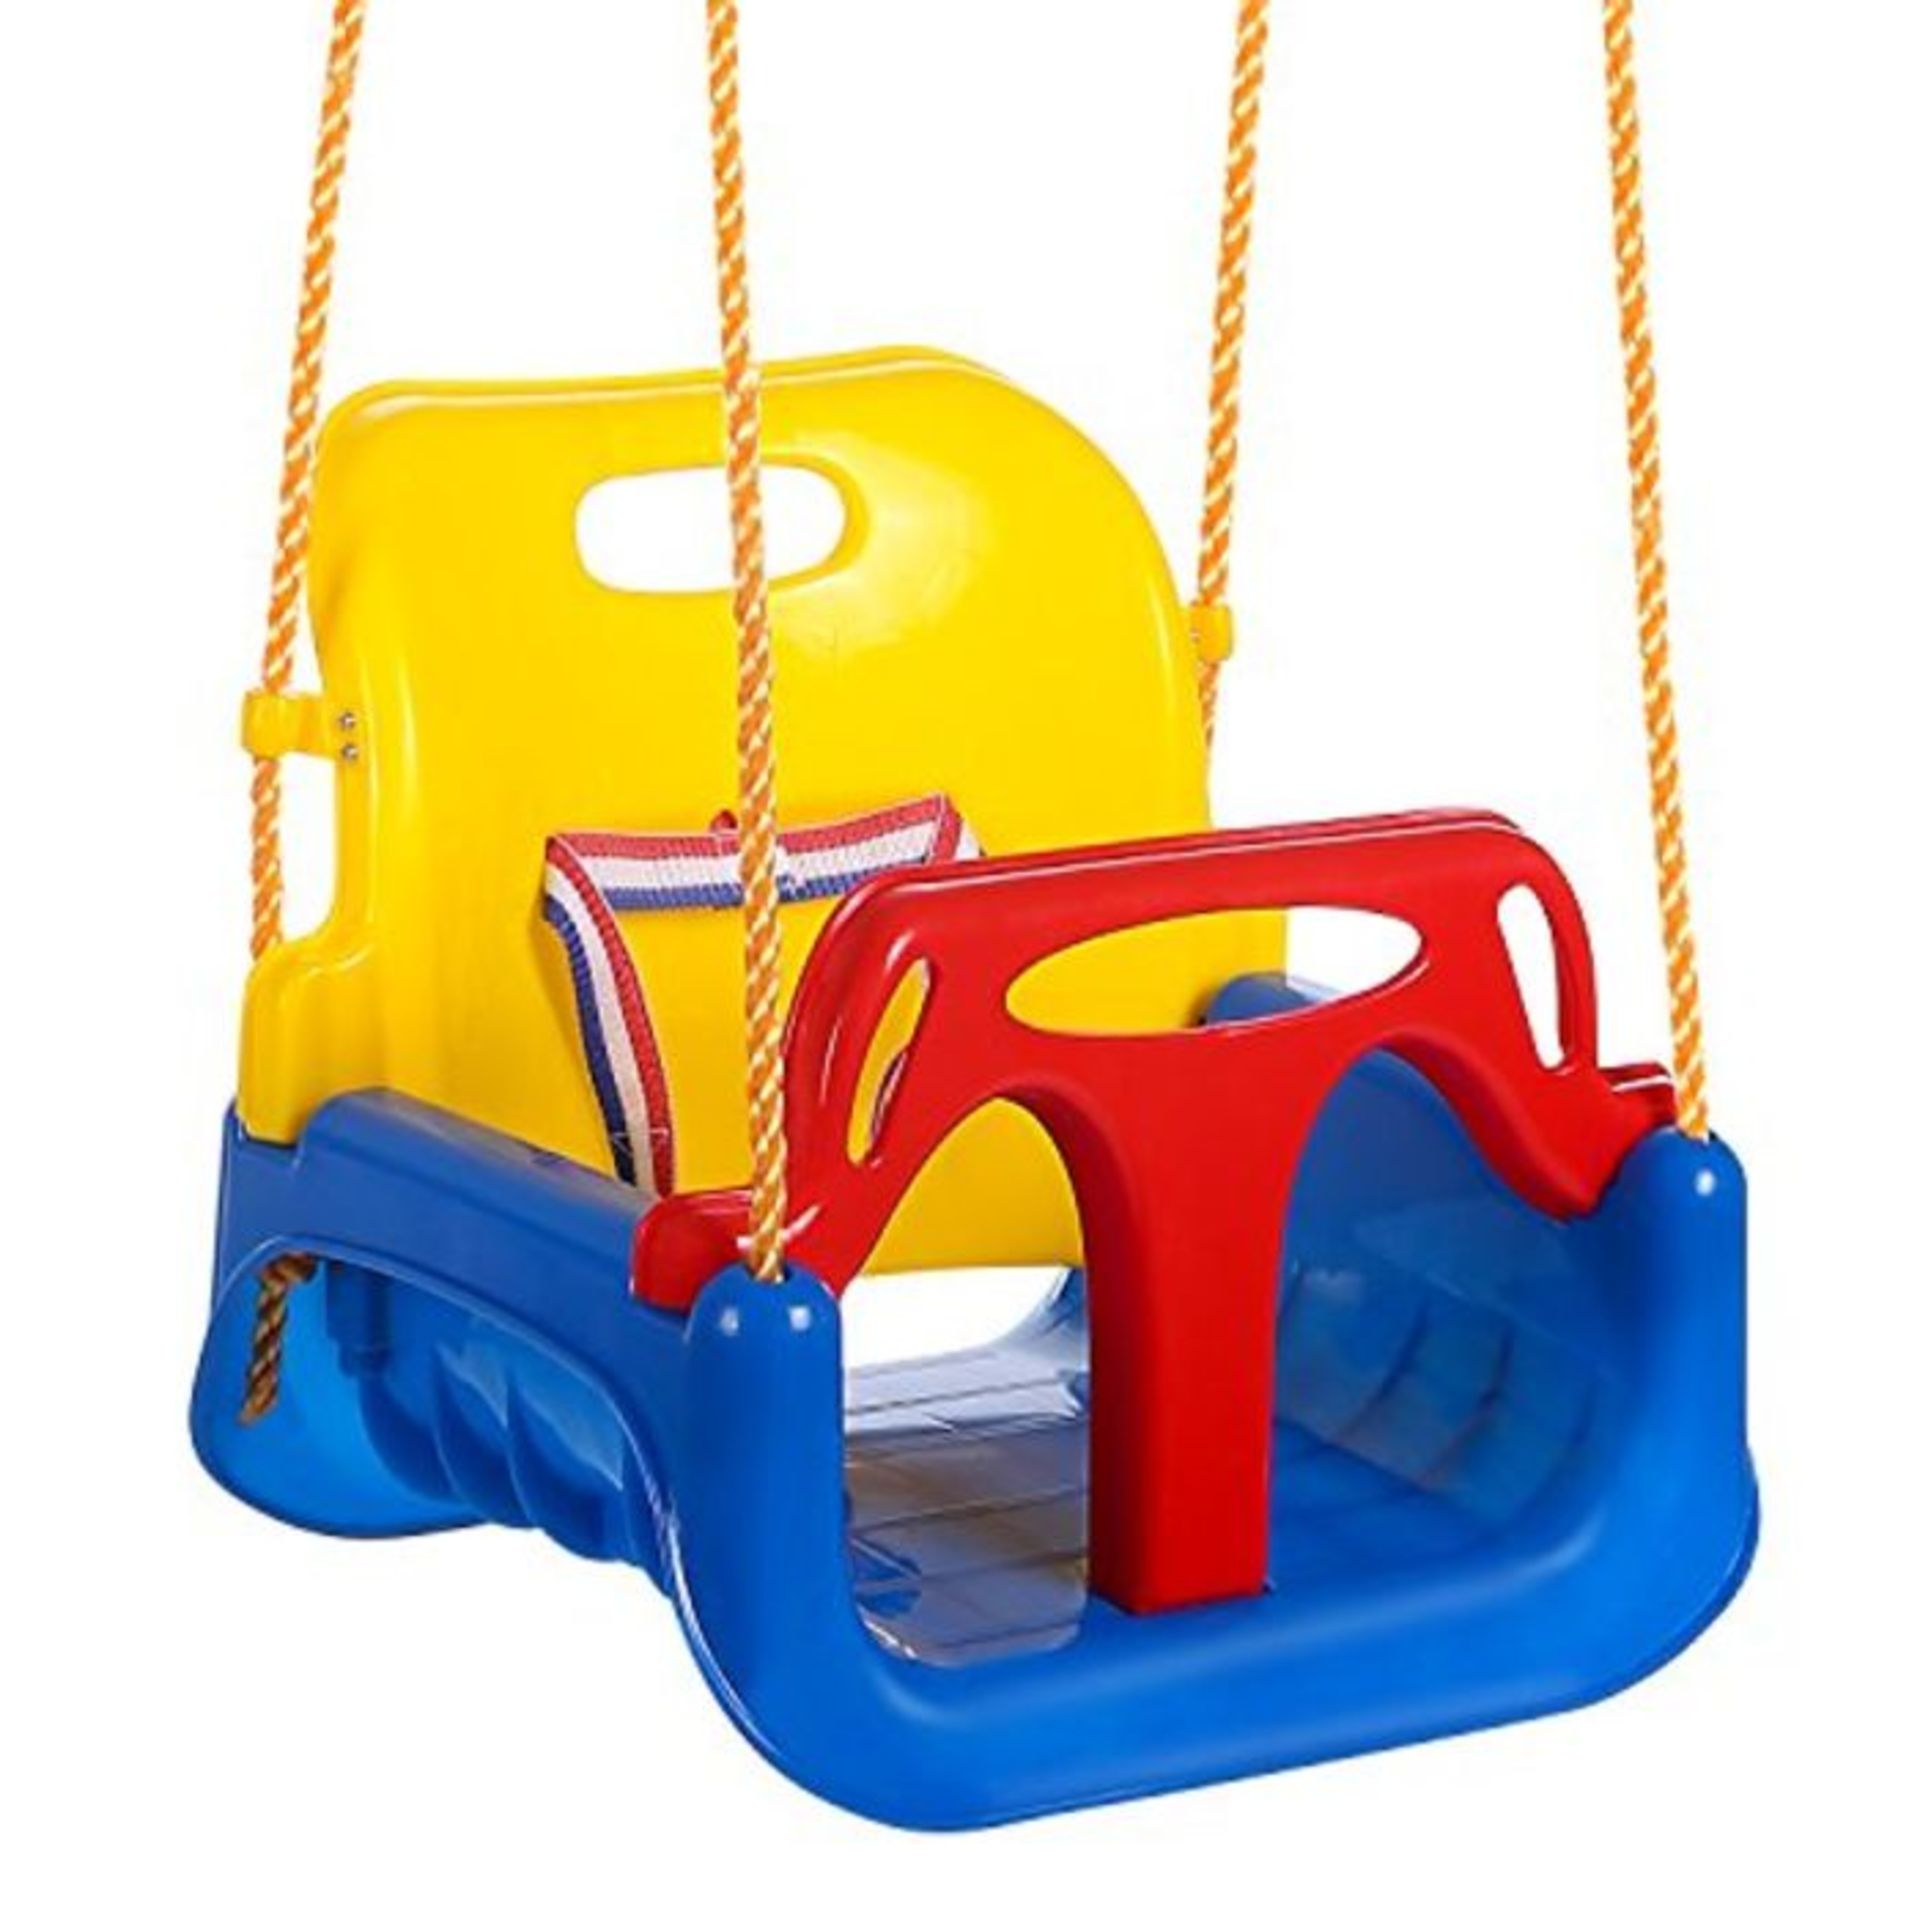 ANCHEER 3-in-1 Infants to Teens Swing Seat, Detachable Outdoor Toddlers Children Hangi